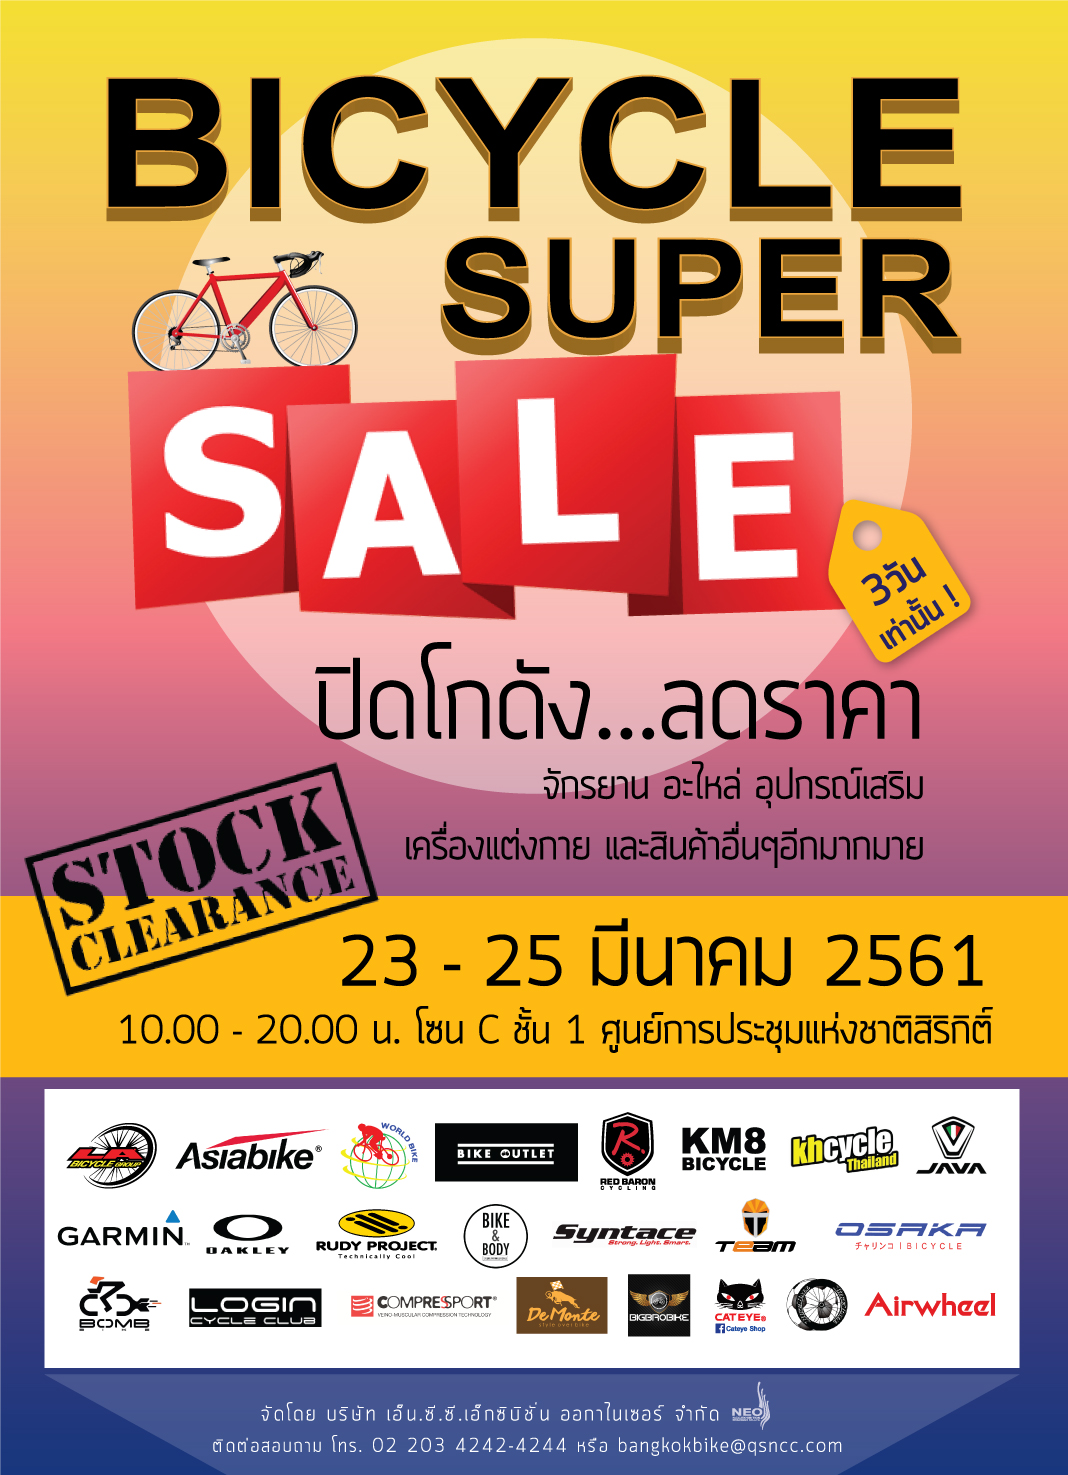 Bicycle Super Sale 2018